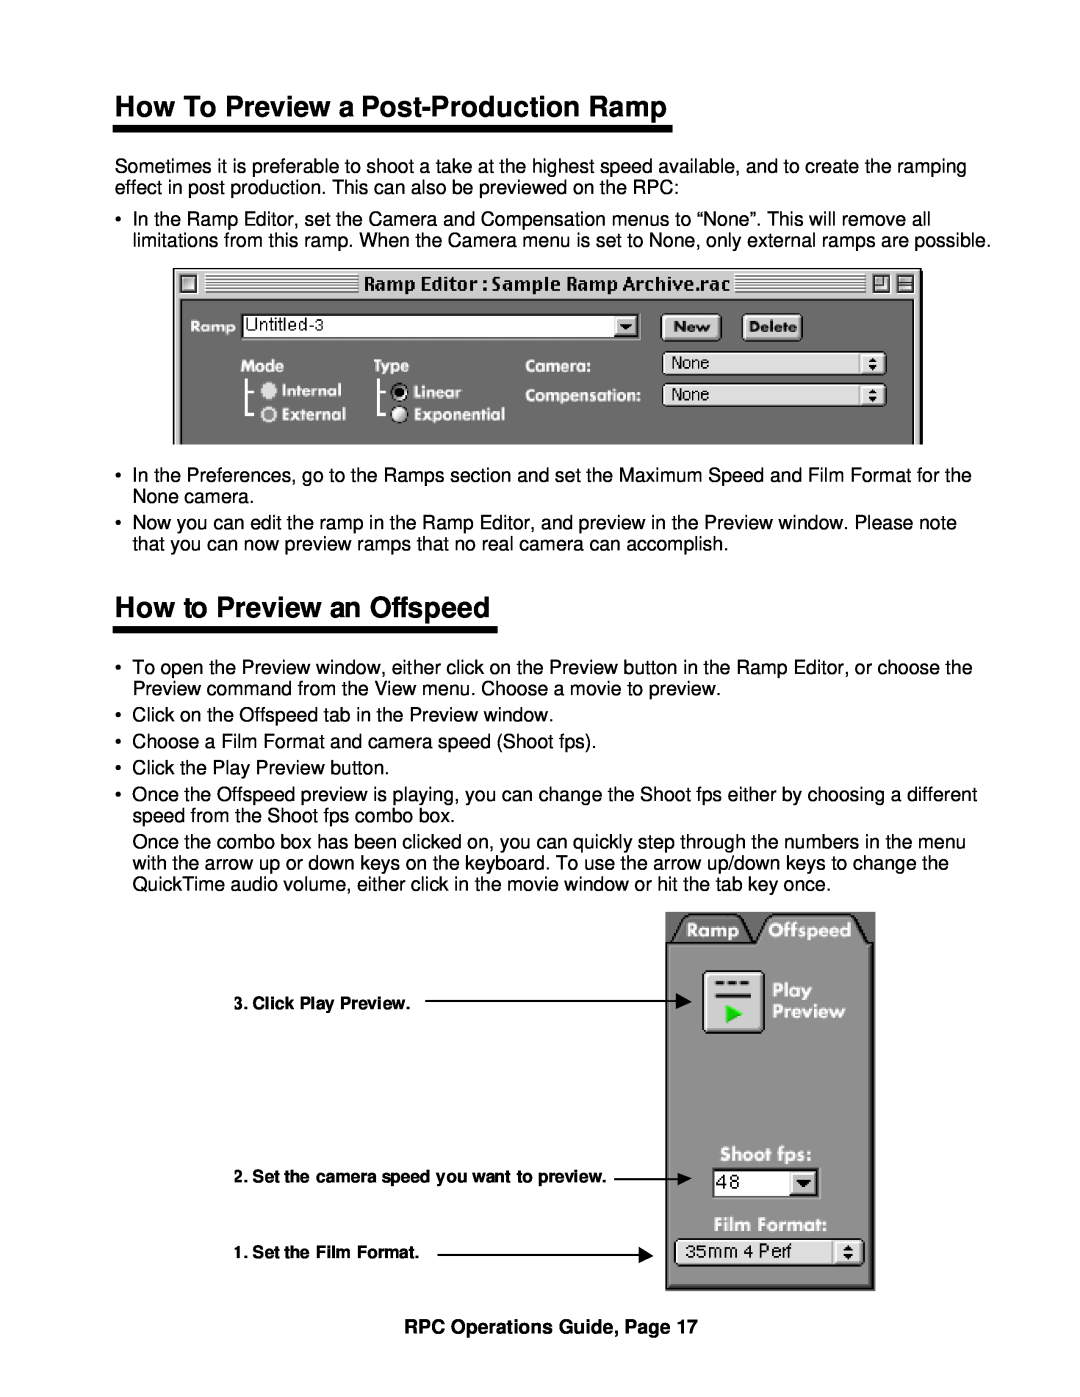 ARRI ARRI Ramp Preview Controller manual How To Preview a Post-ProductionRamp, How to Preview an Offspeed 